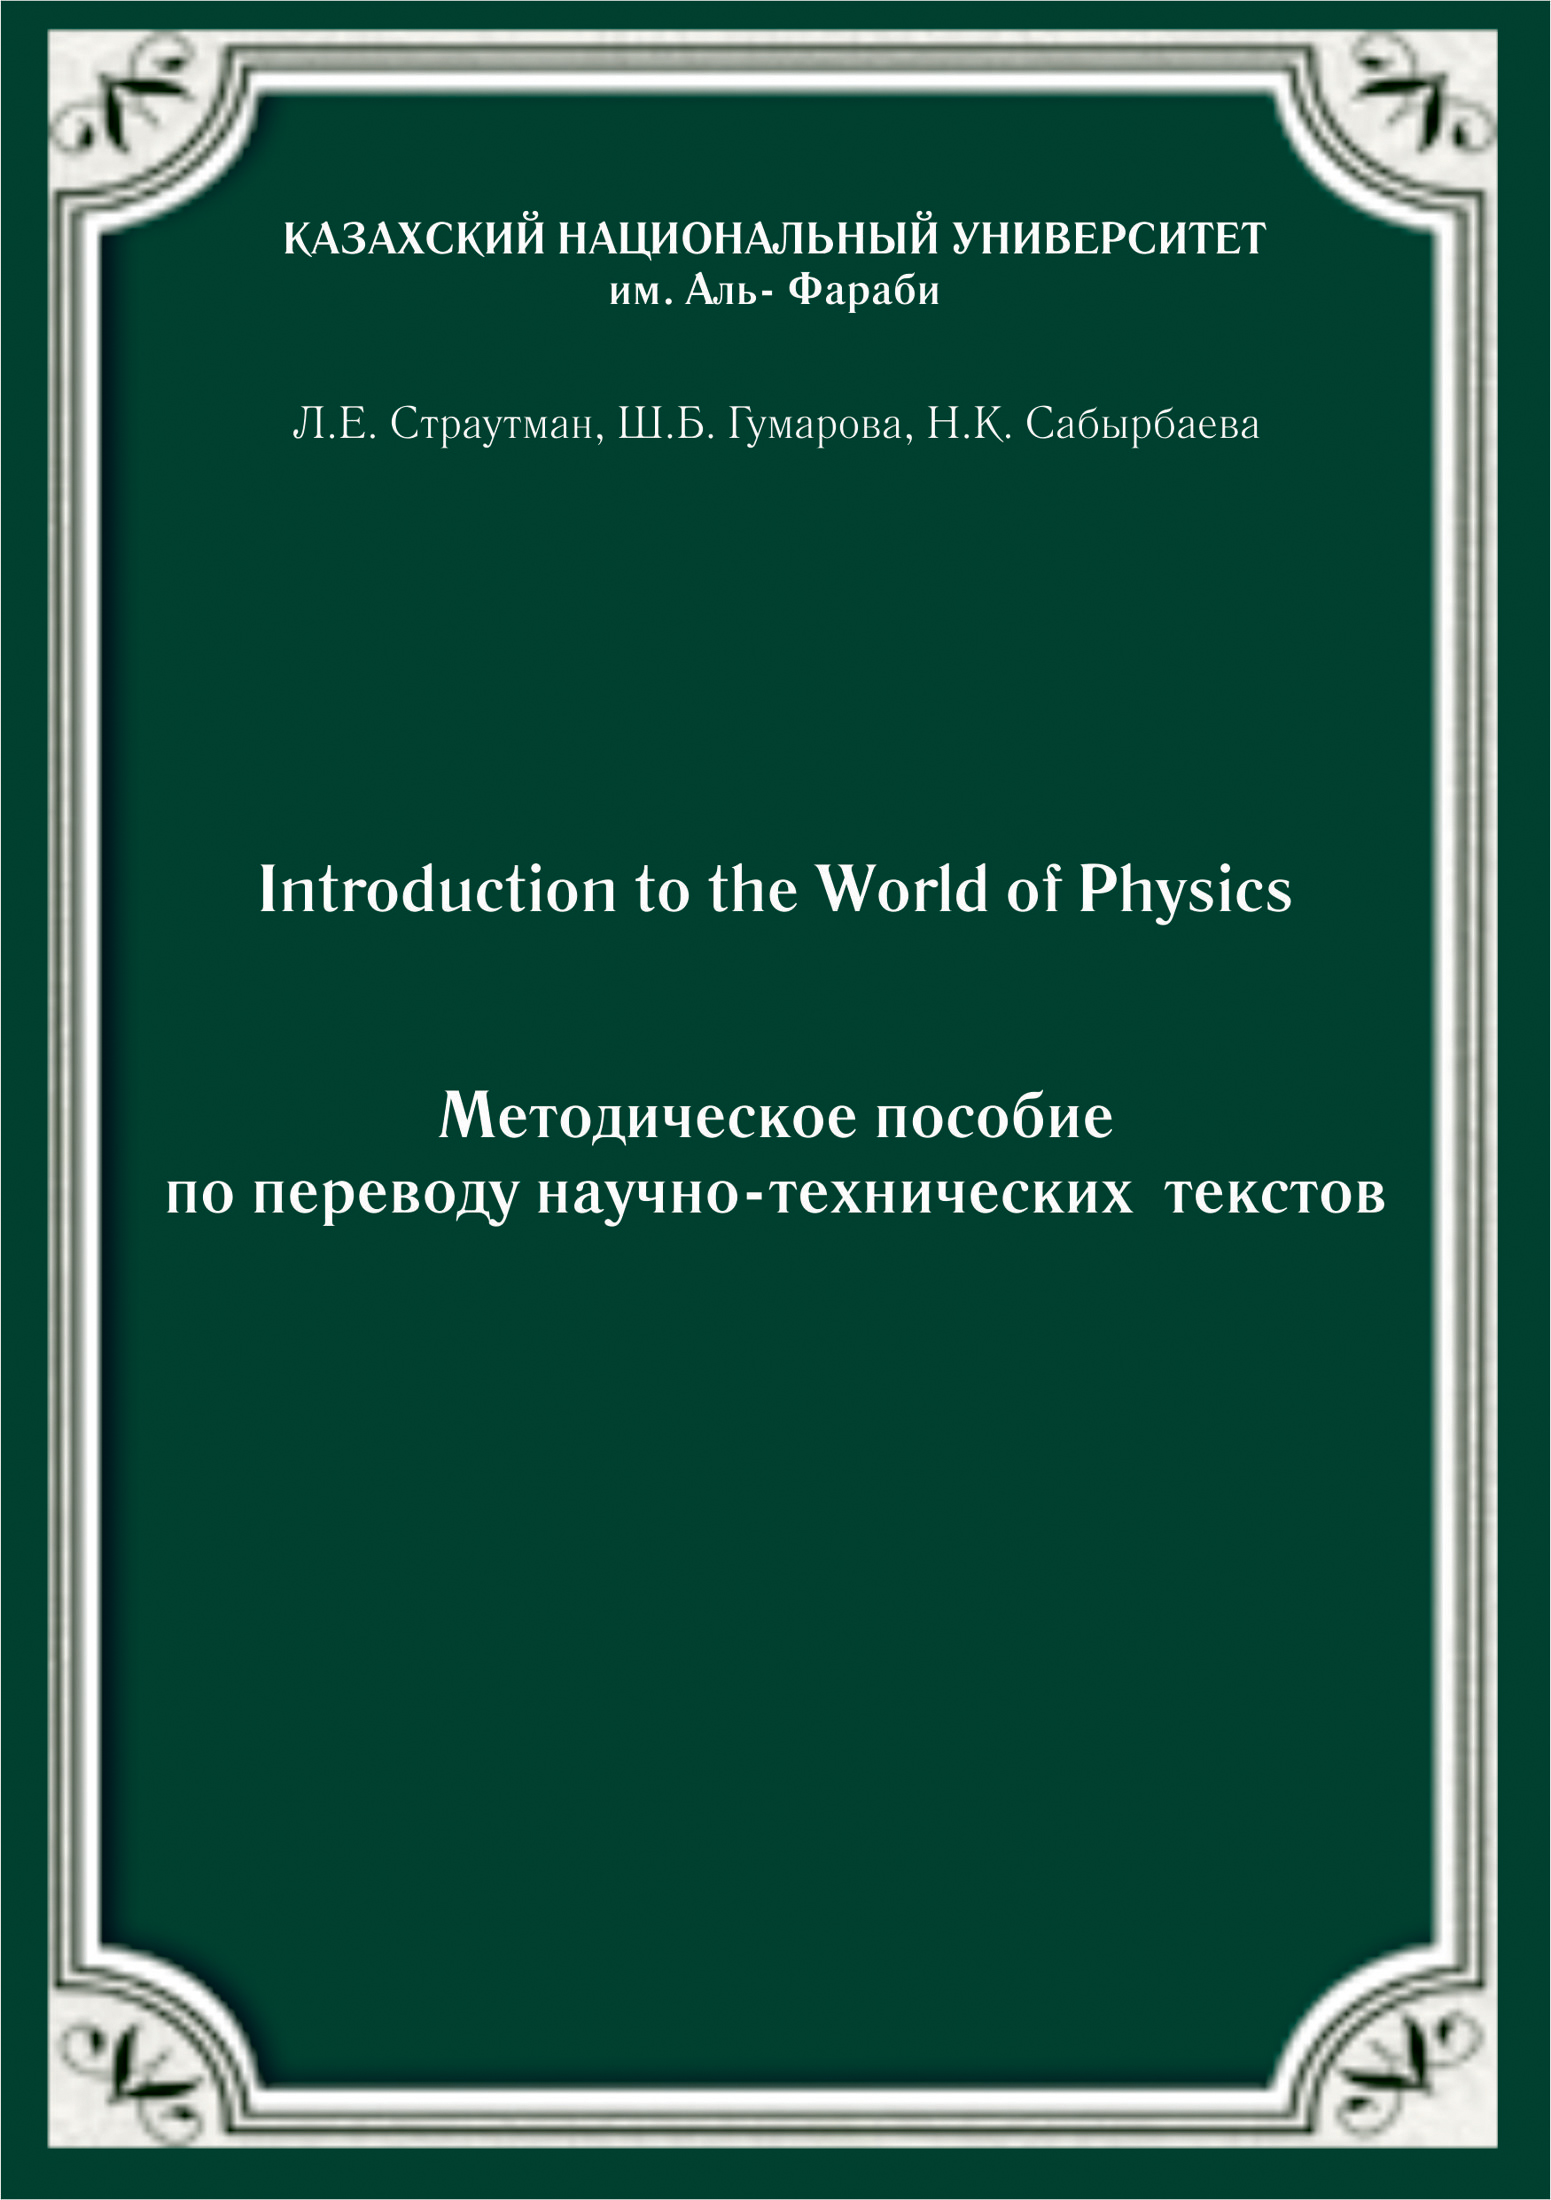 Introduction to the World of Physics.Методическое пособие по переводу научно-технических текстов